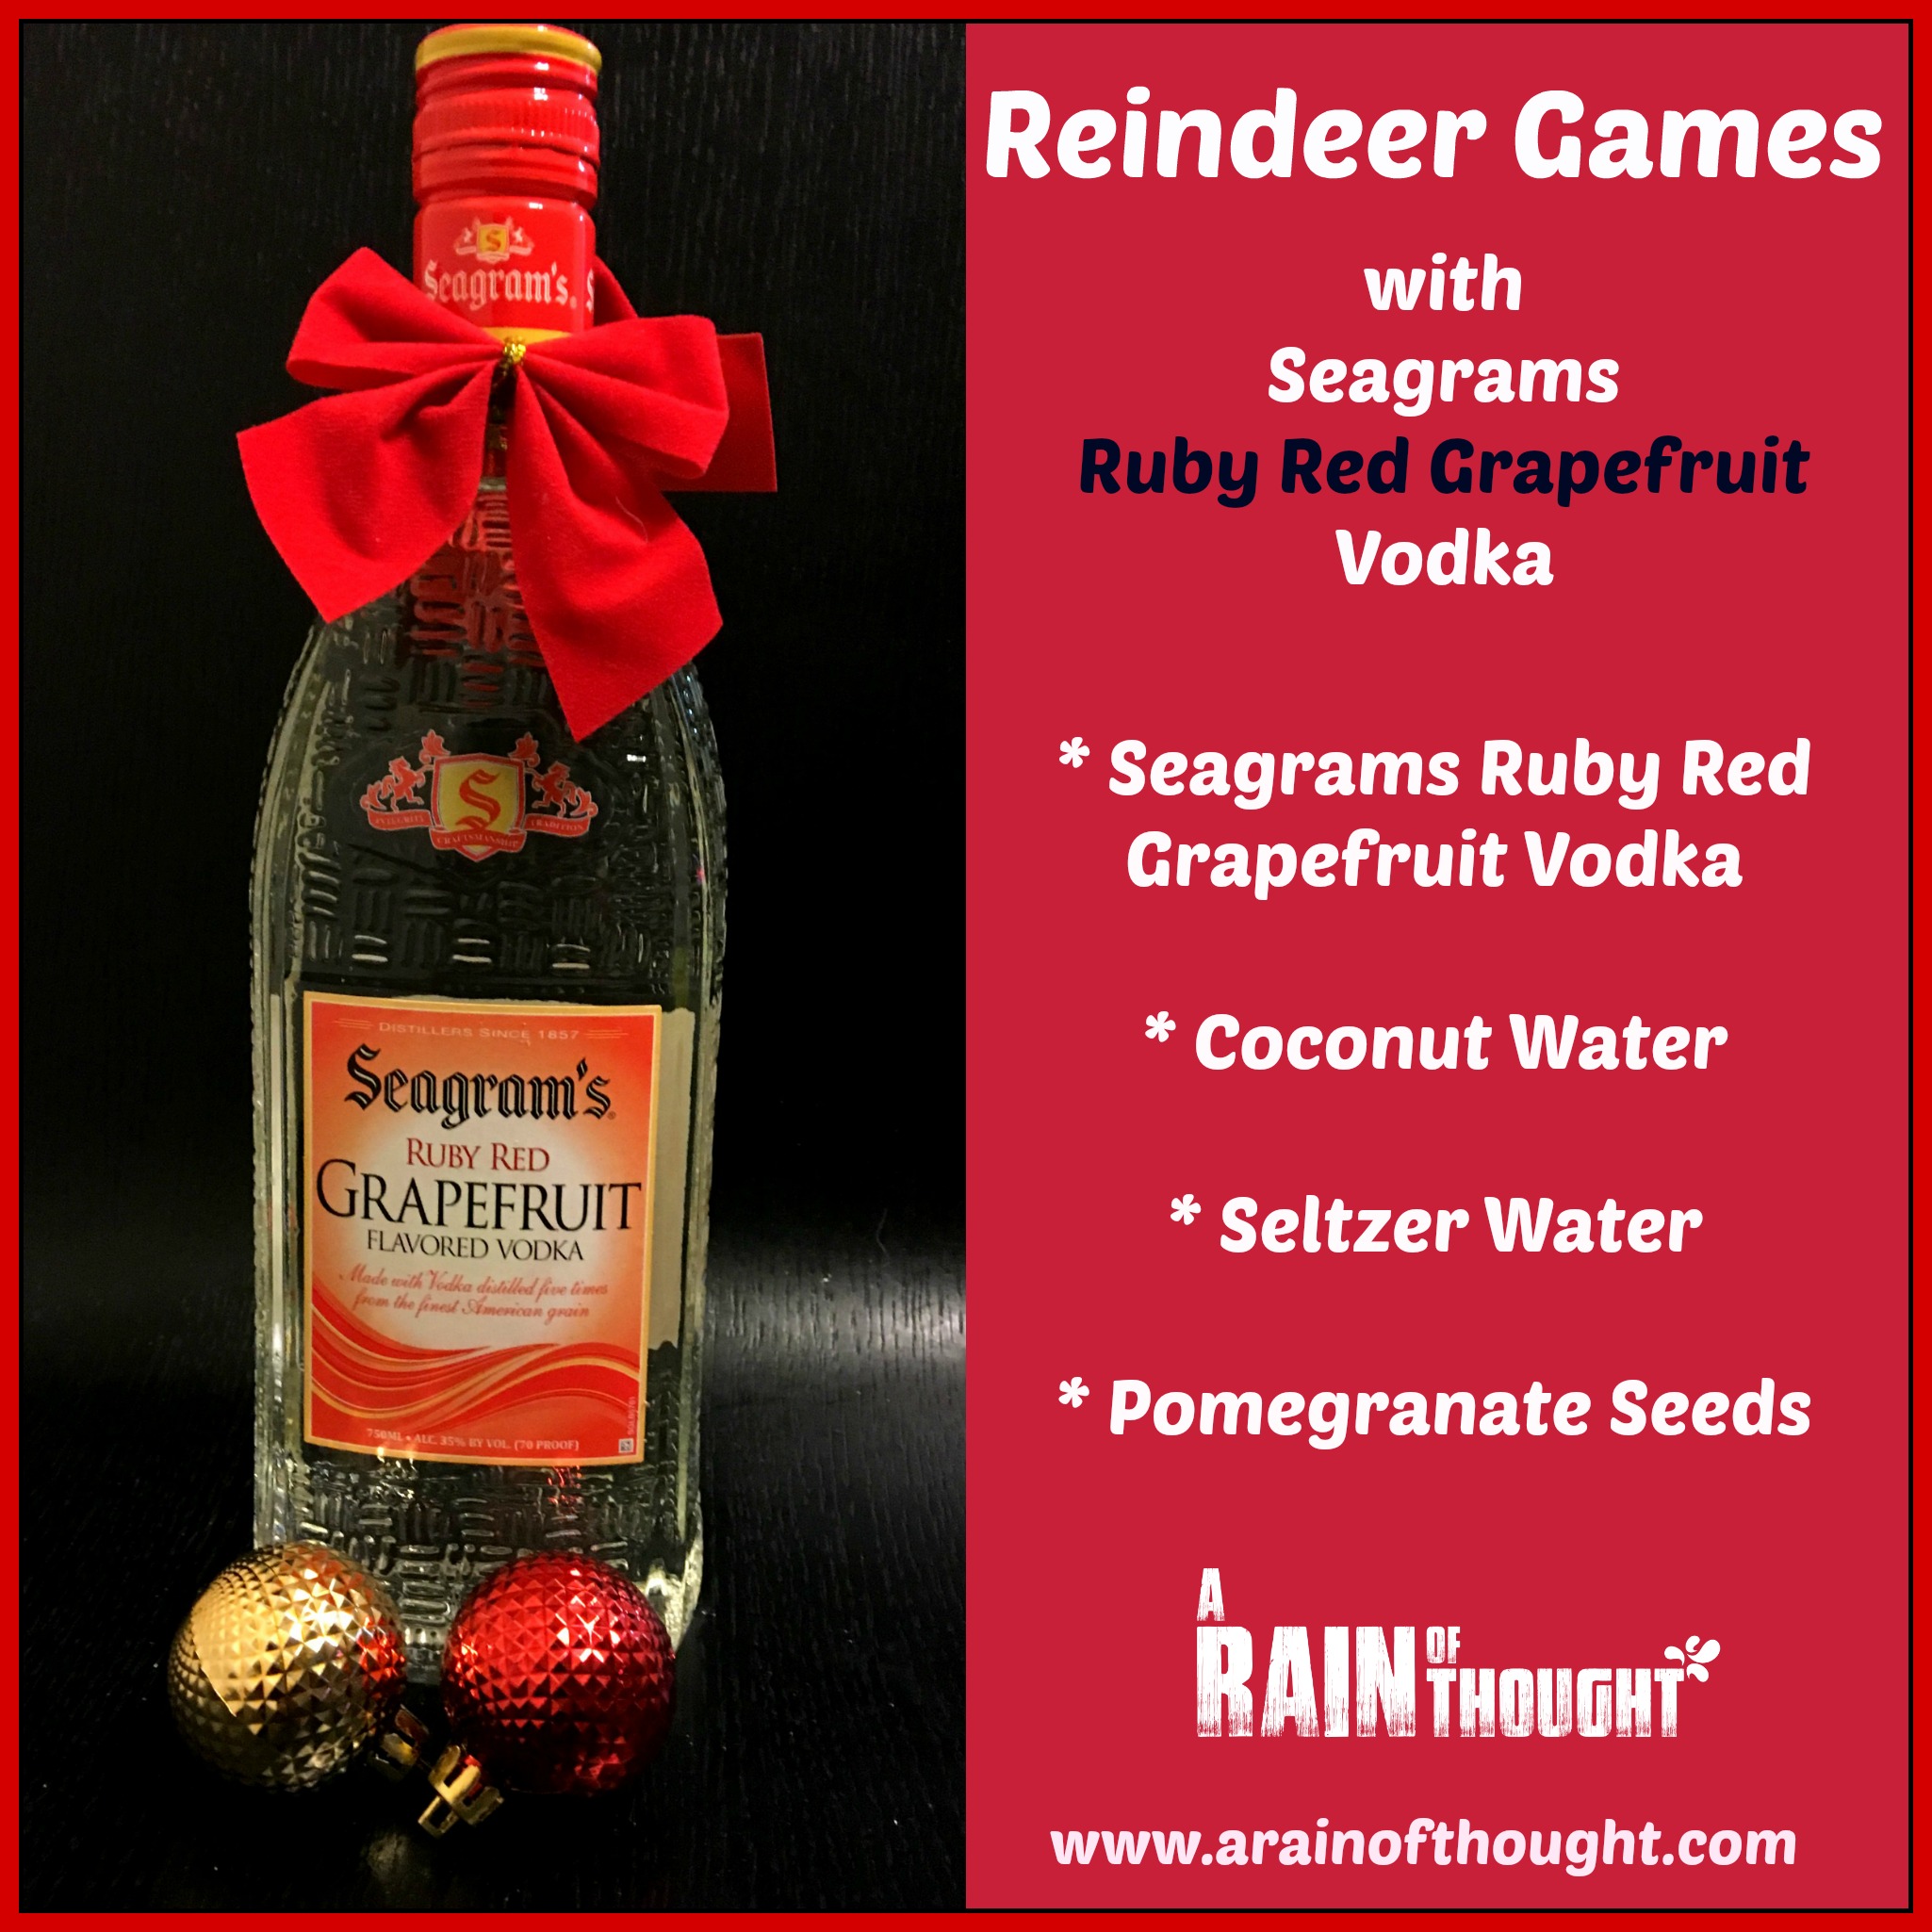 Seagrams Ruby Red Grapefruit Vodka